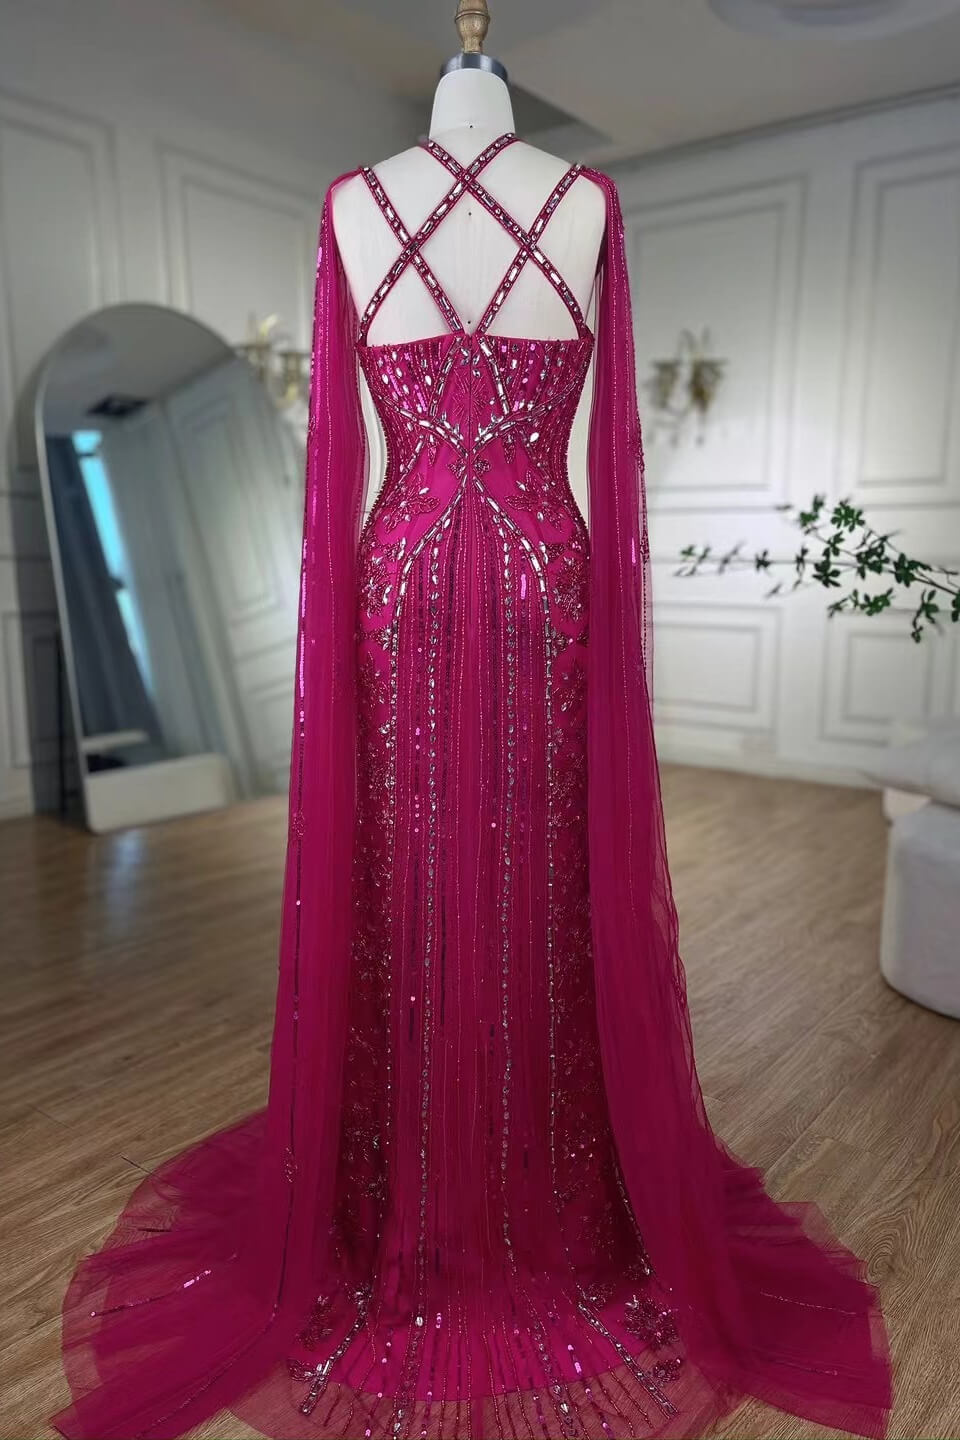 Suzhoufashion Classy Hot Pink Beadings Evening Dress Mermaid Long With ...